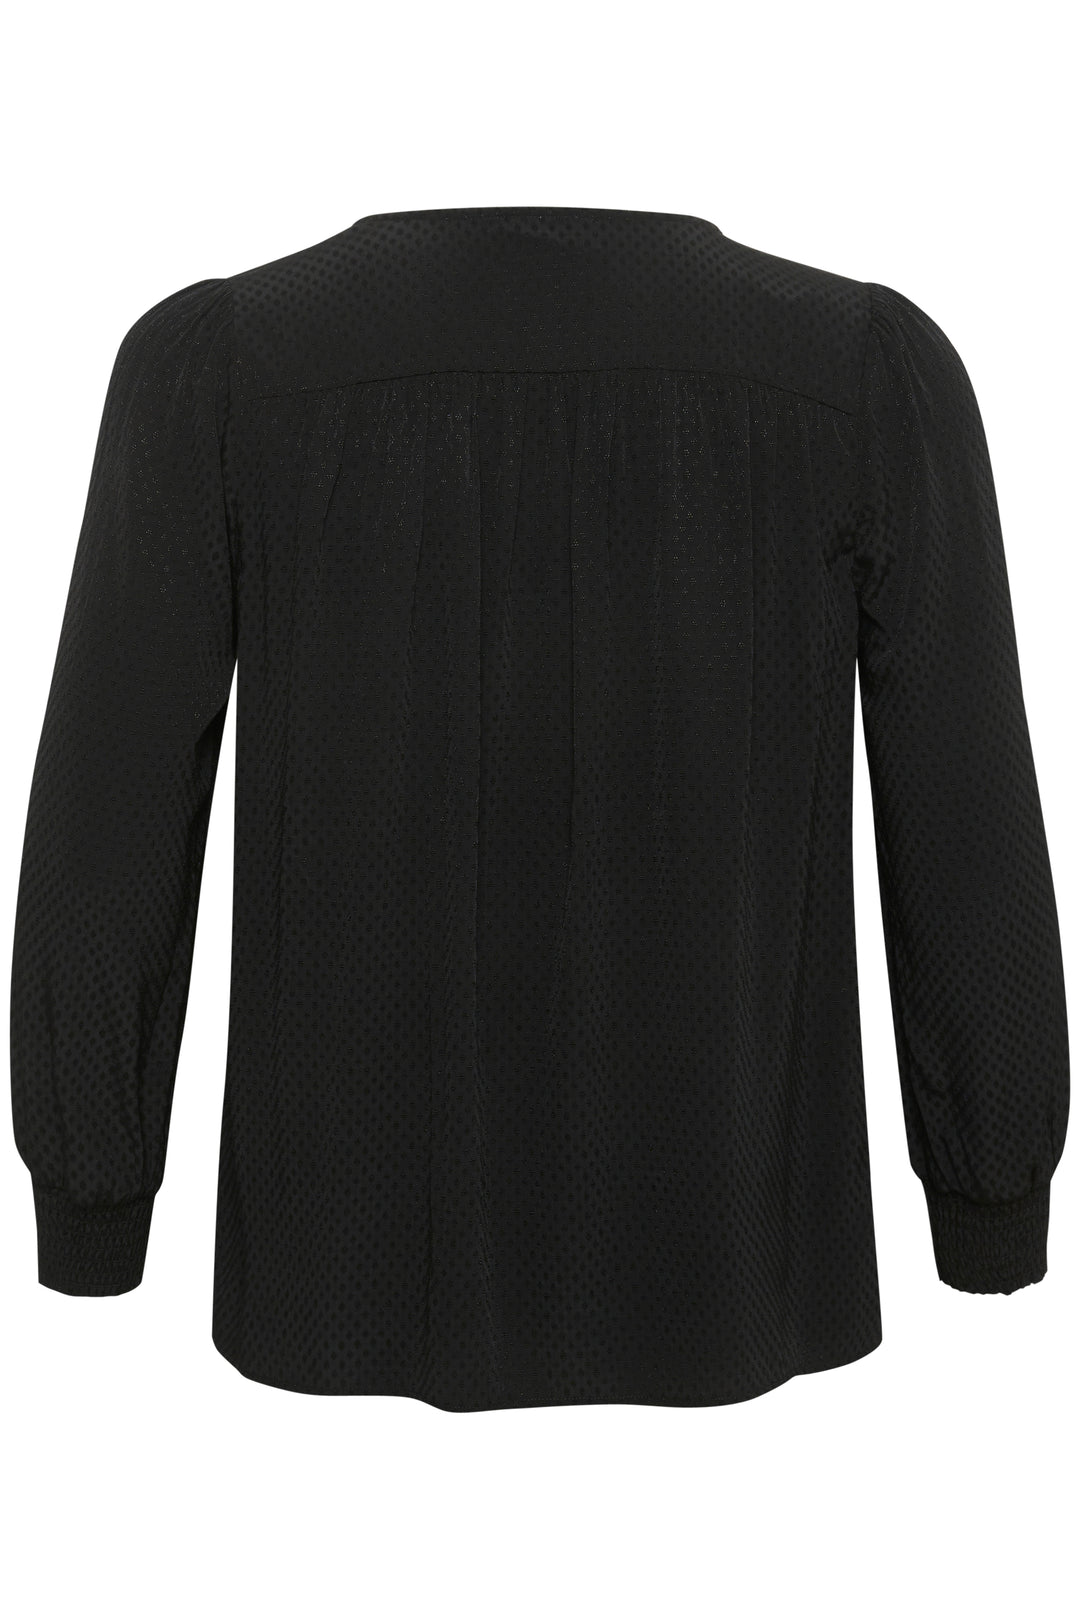 zwarte blouse met toon op toon print - kaffe curve - - grote maten - dameskleding - kledingwinkel - herent - leuven